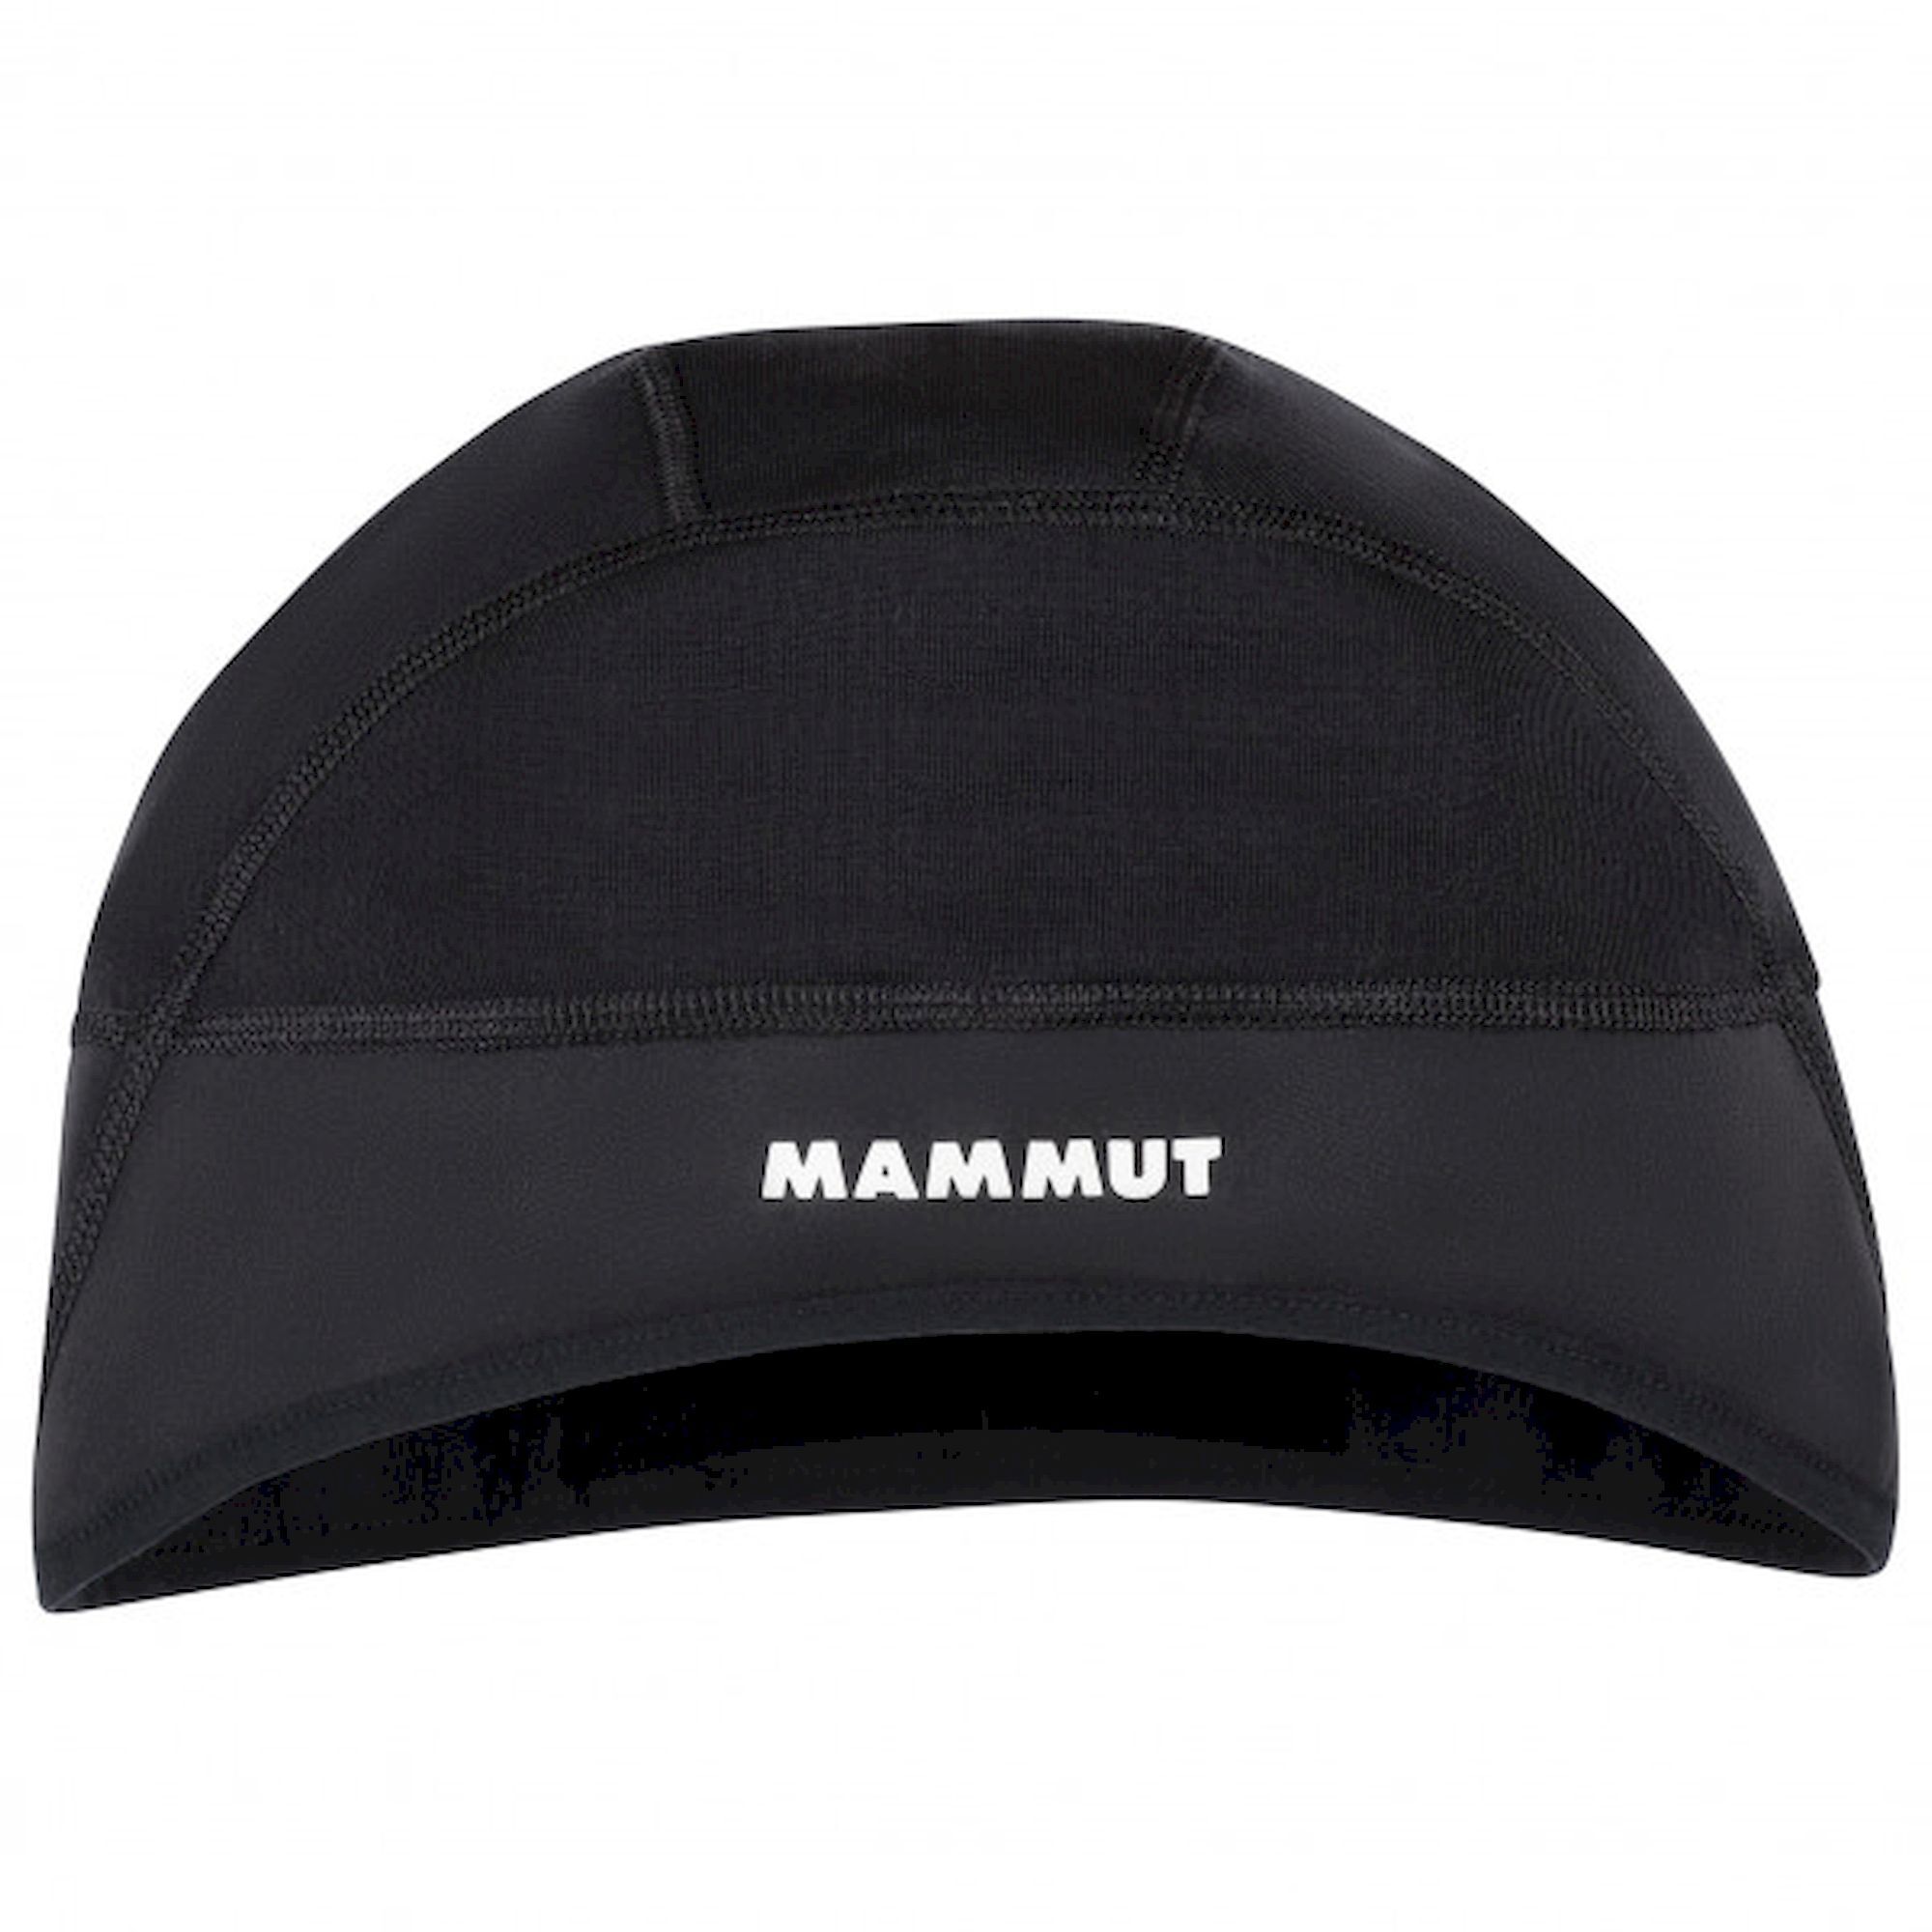 Mammut WS Helm Cap - Gorro - Hombre